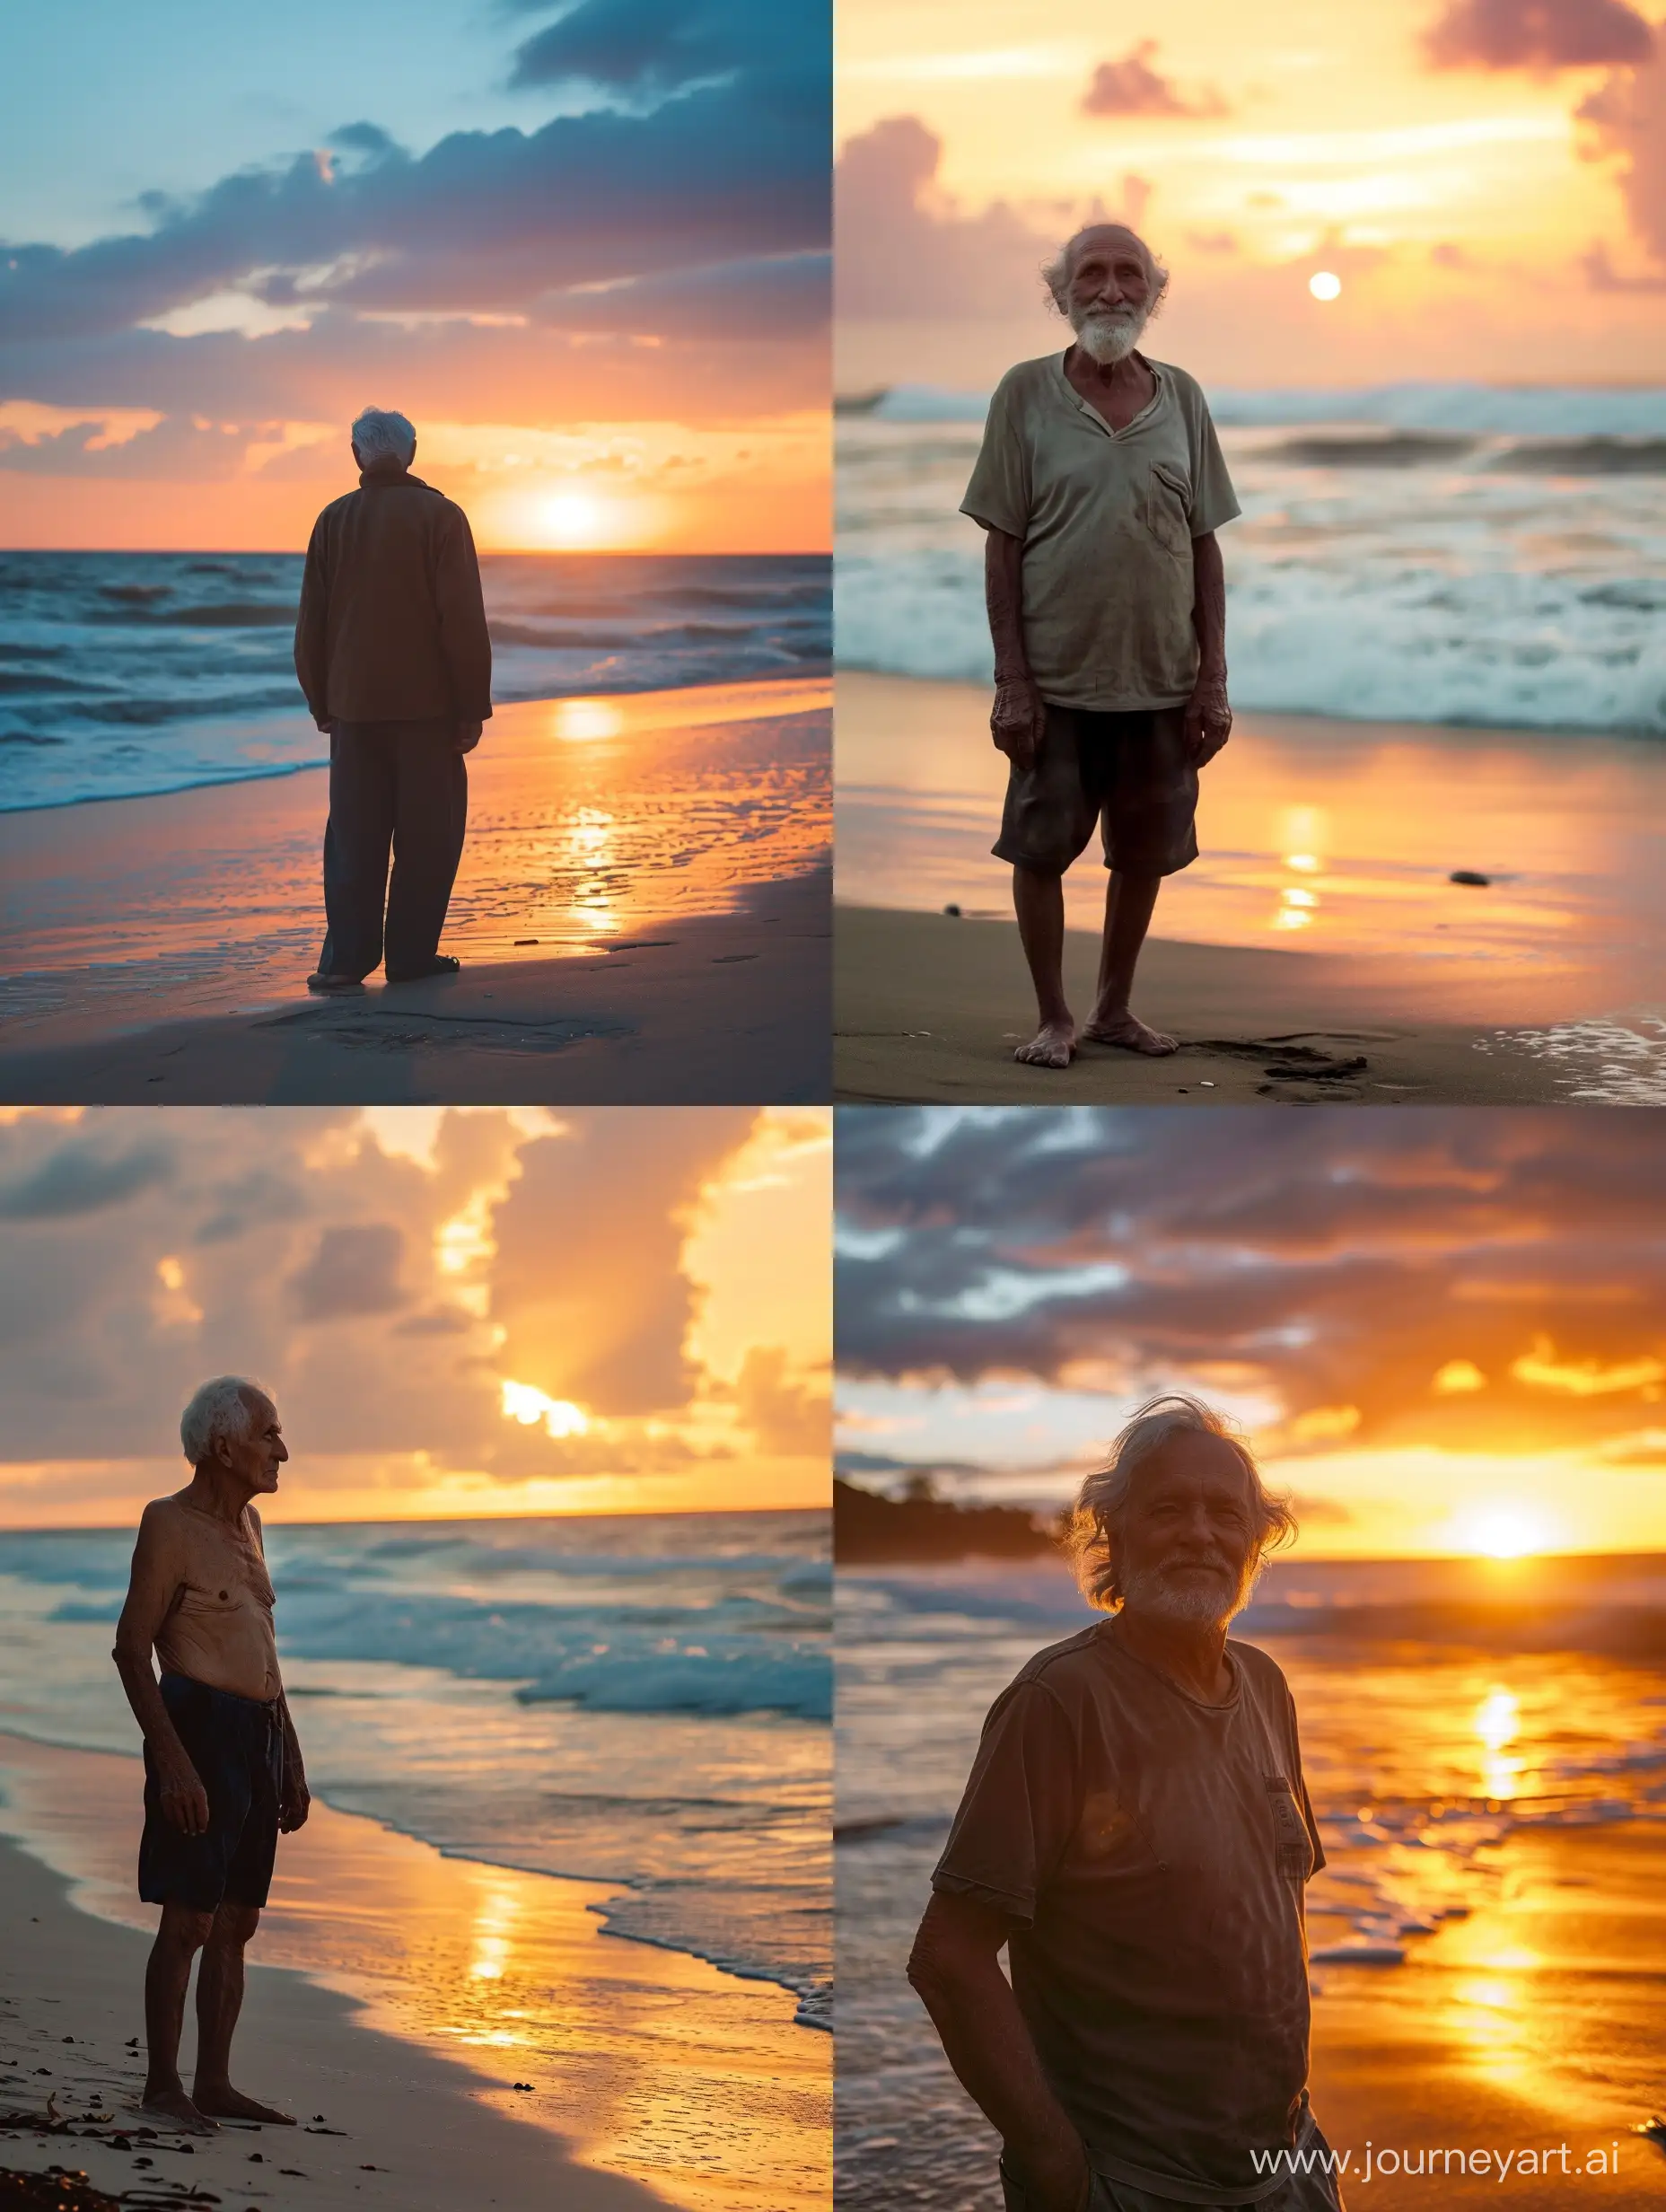 Serene-Sunset-Beach-Scene-with-Old-Man